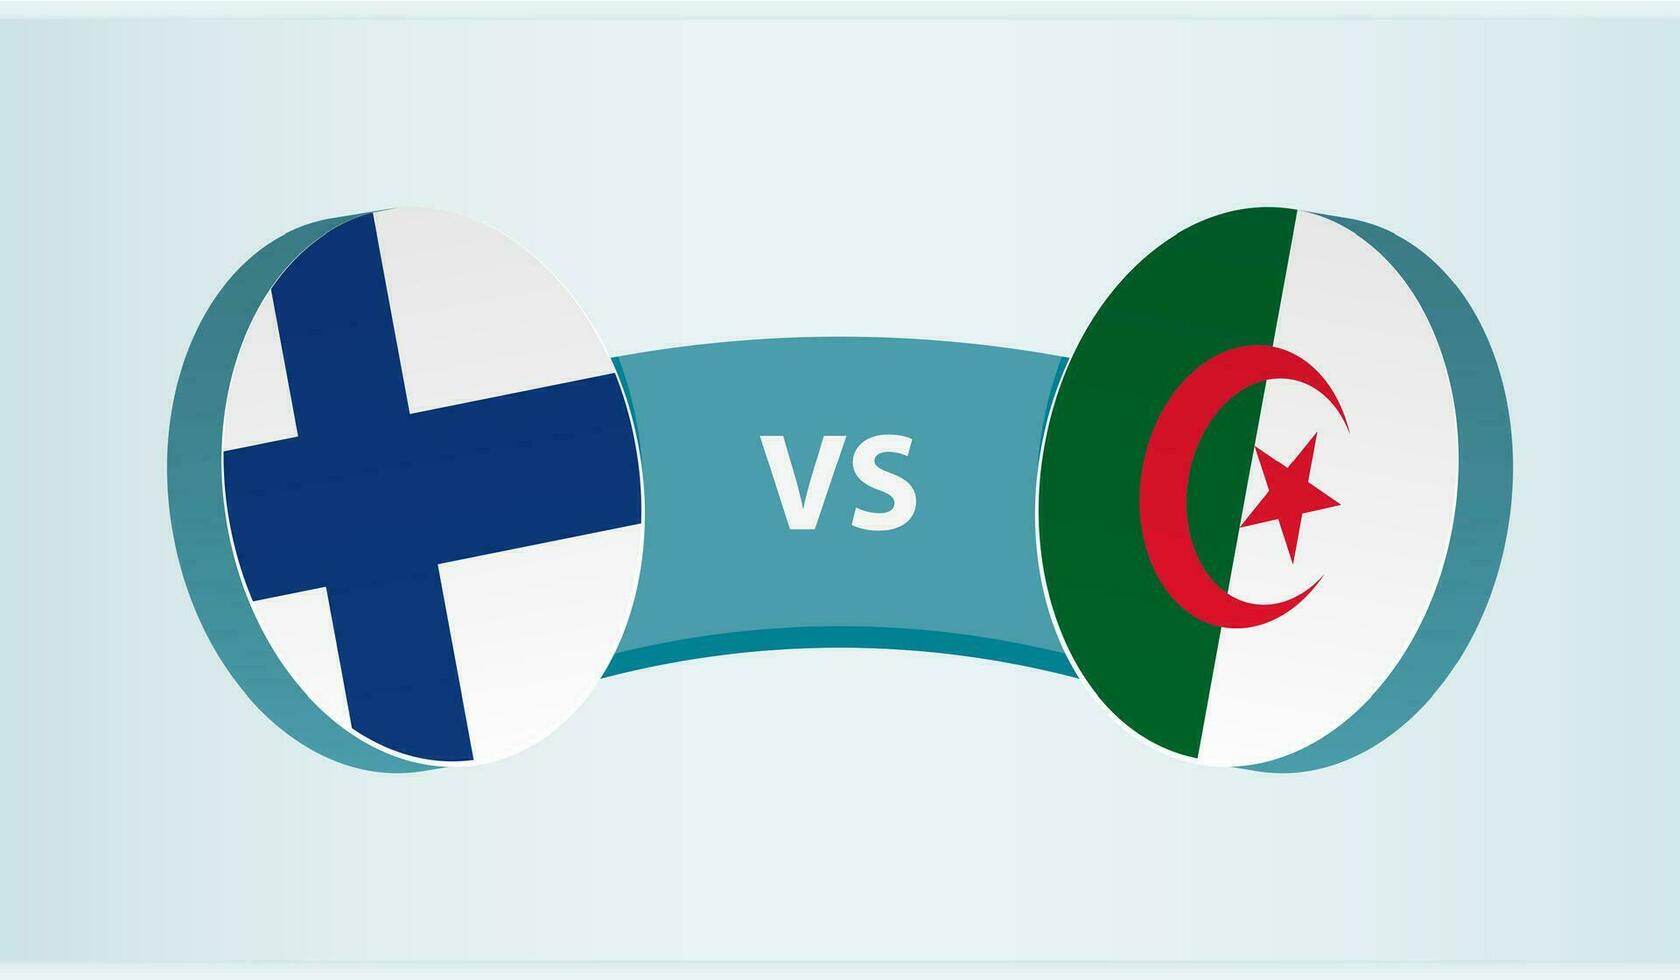 Finland versus Algeria, team sports competition concept. vector